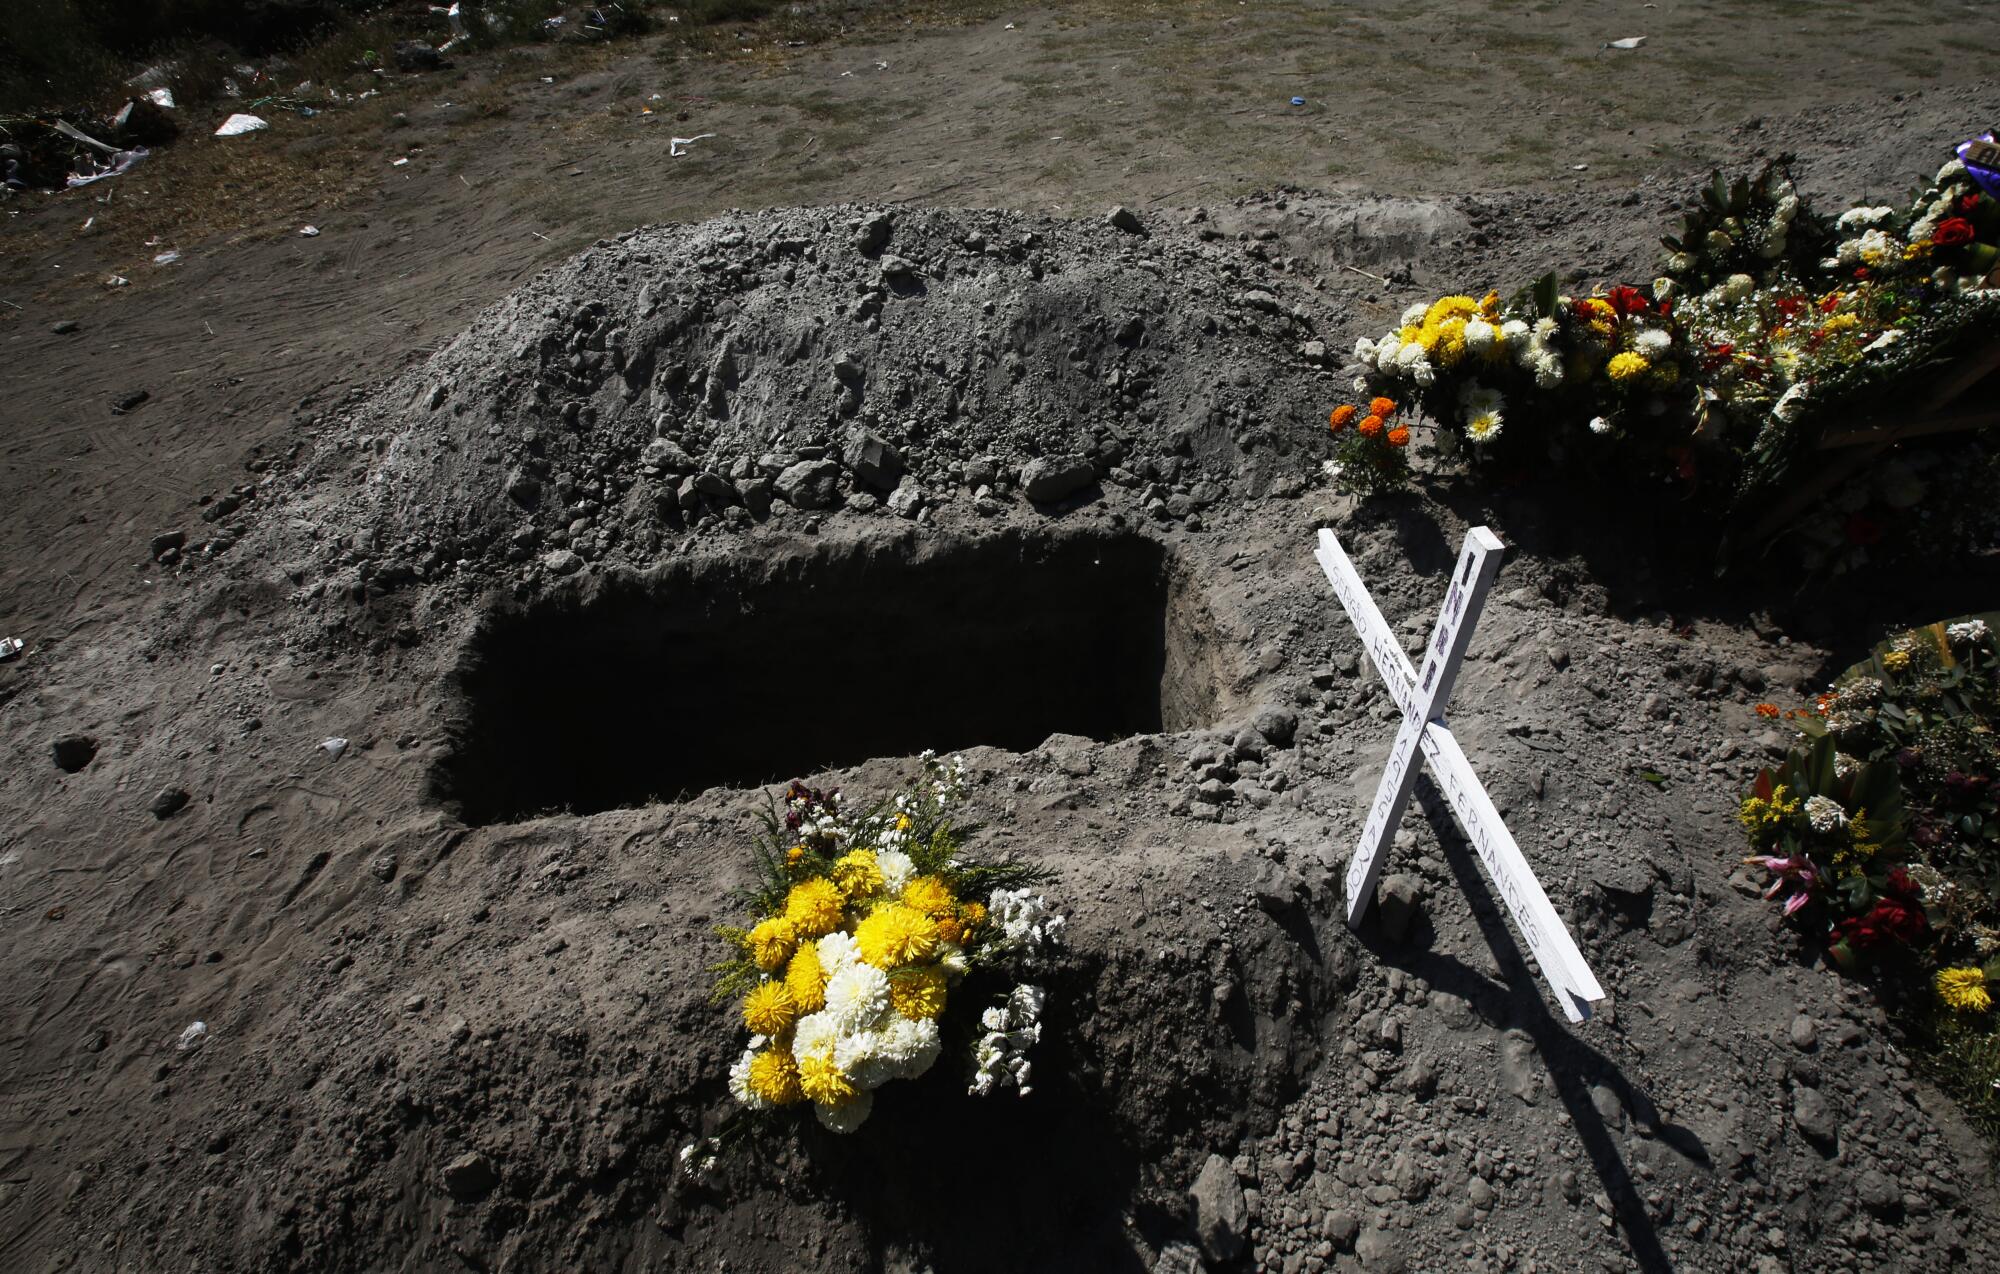 A hole dug in a dirt gravesite